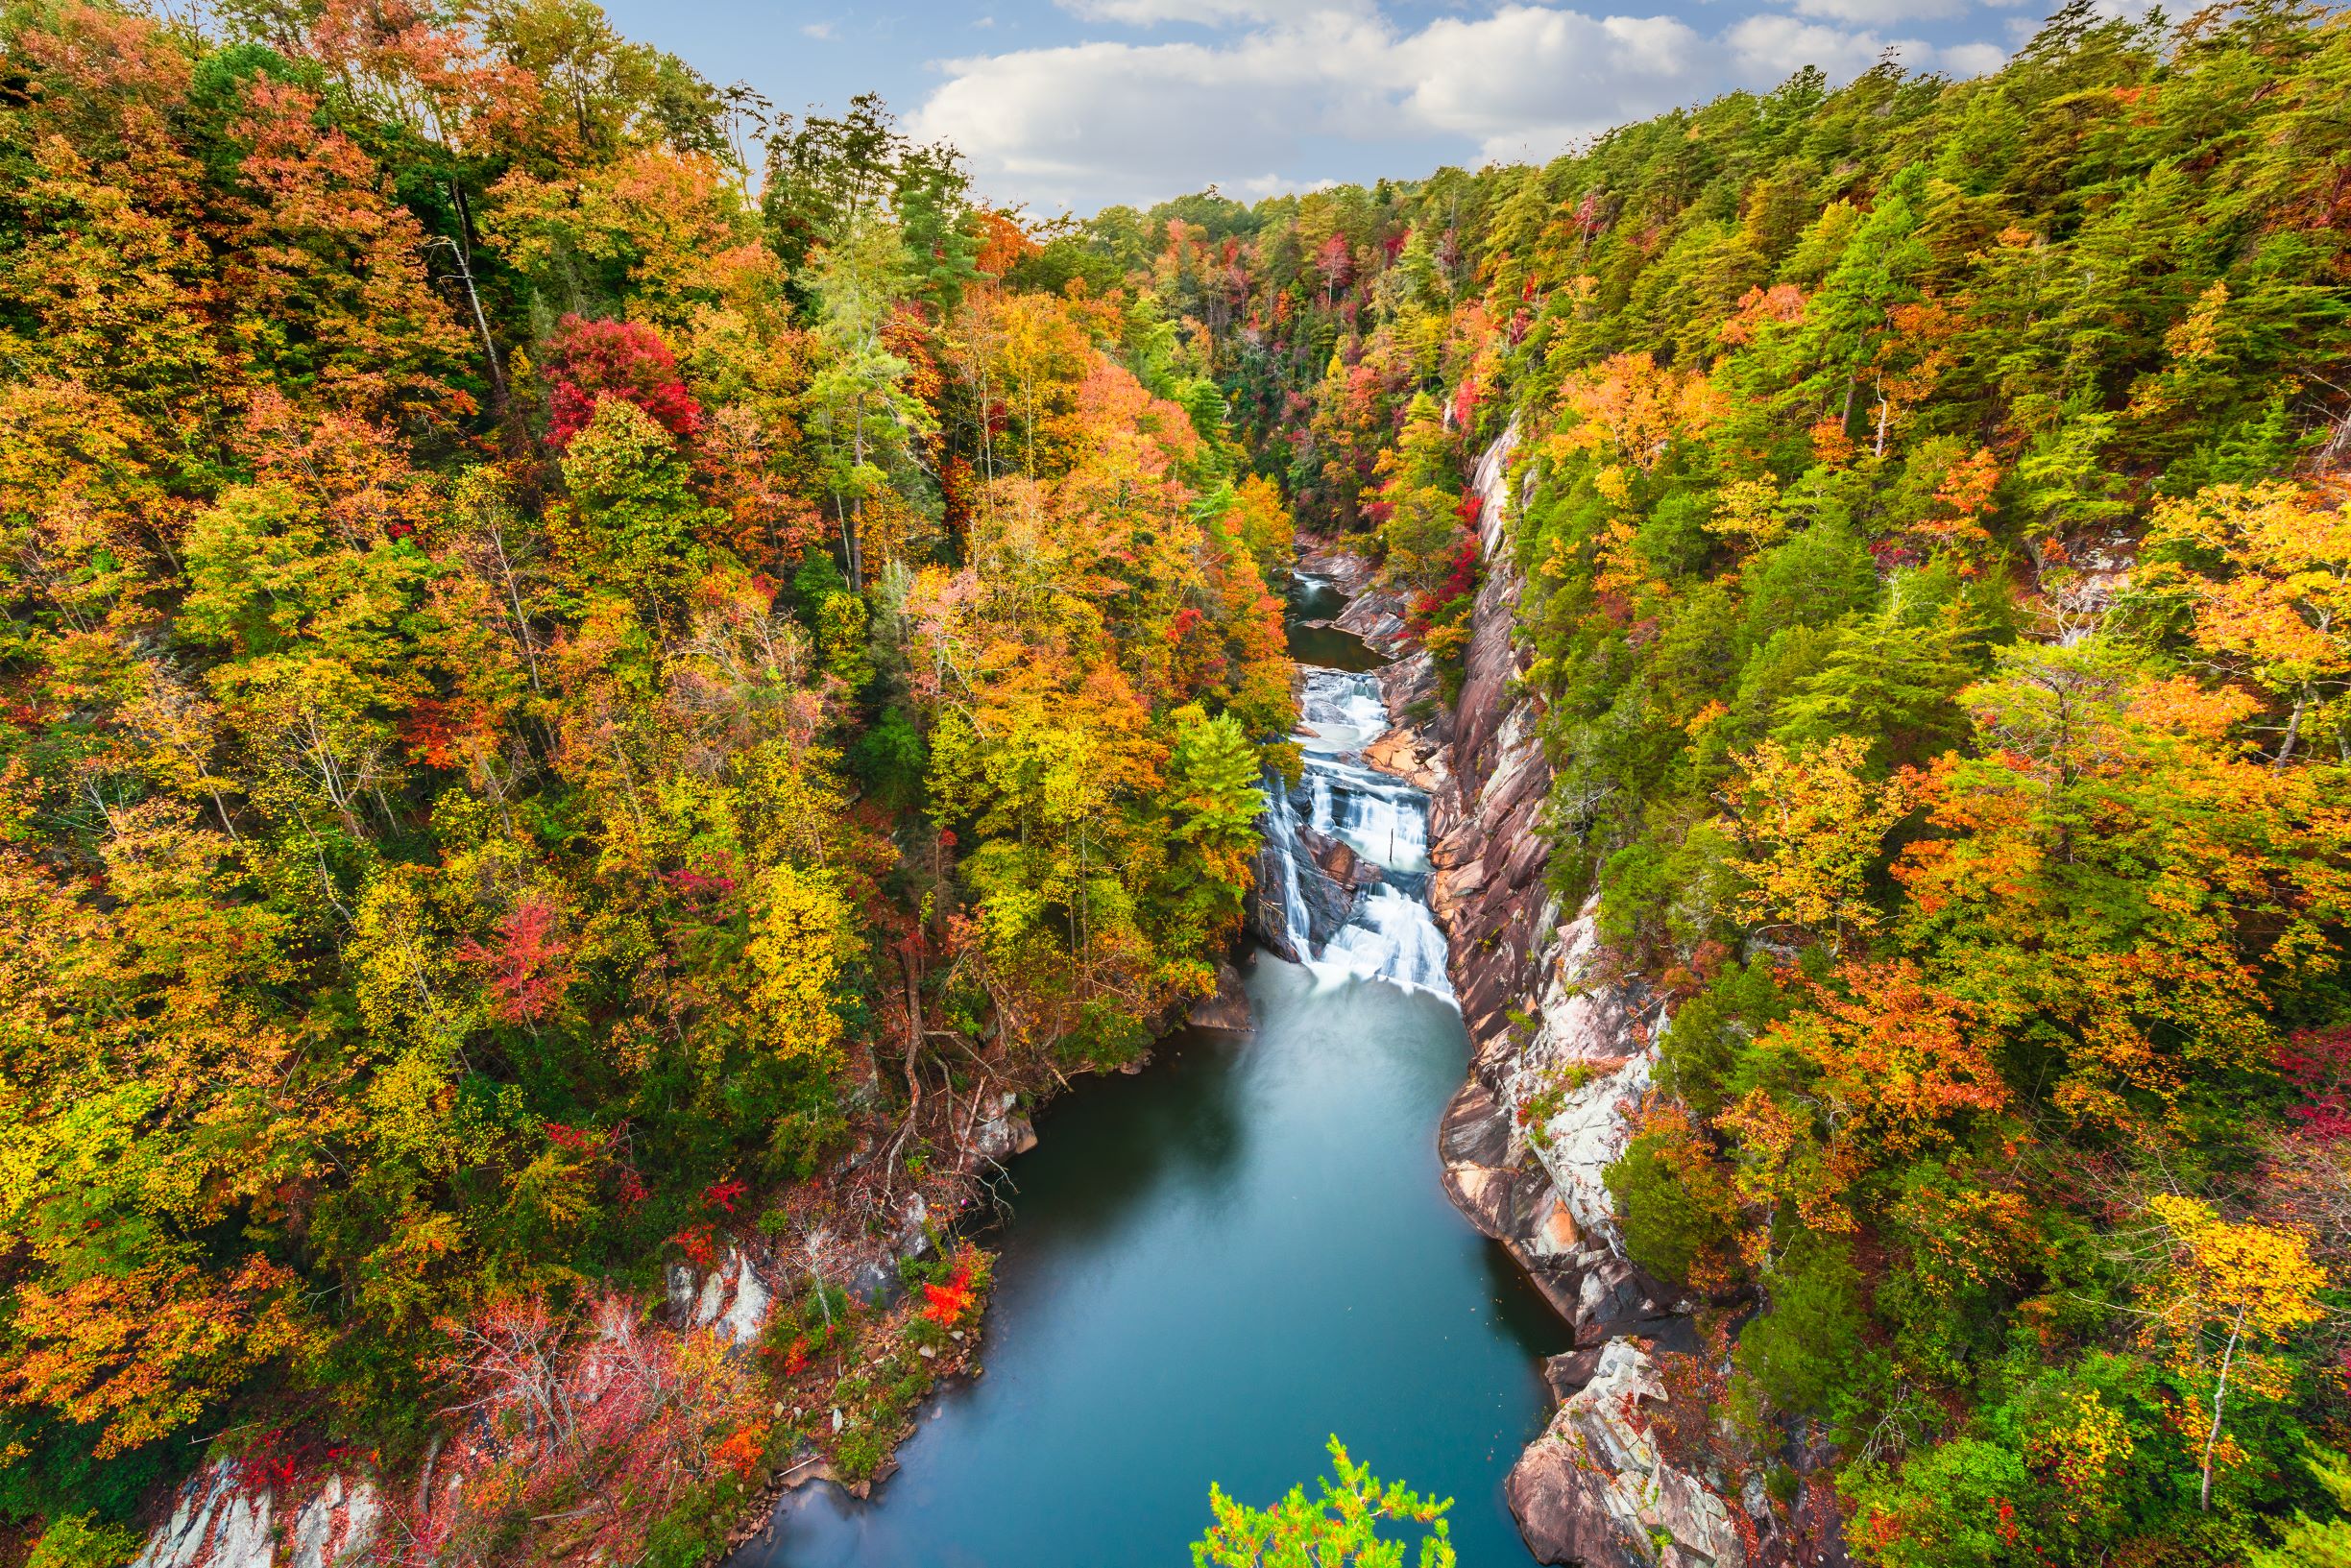 Photo of Tallulah Gorge during Fall in Georgia